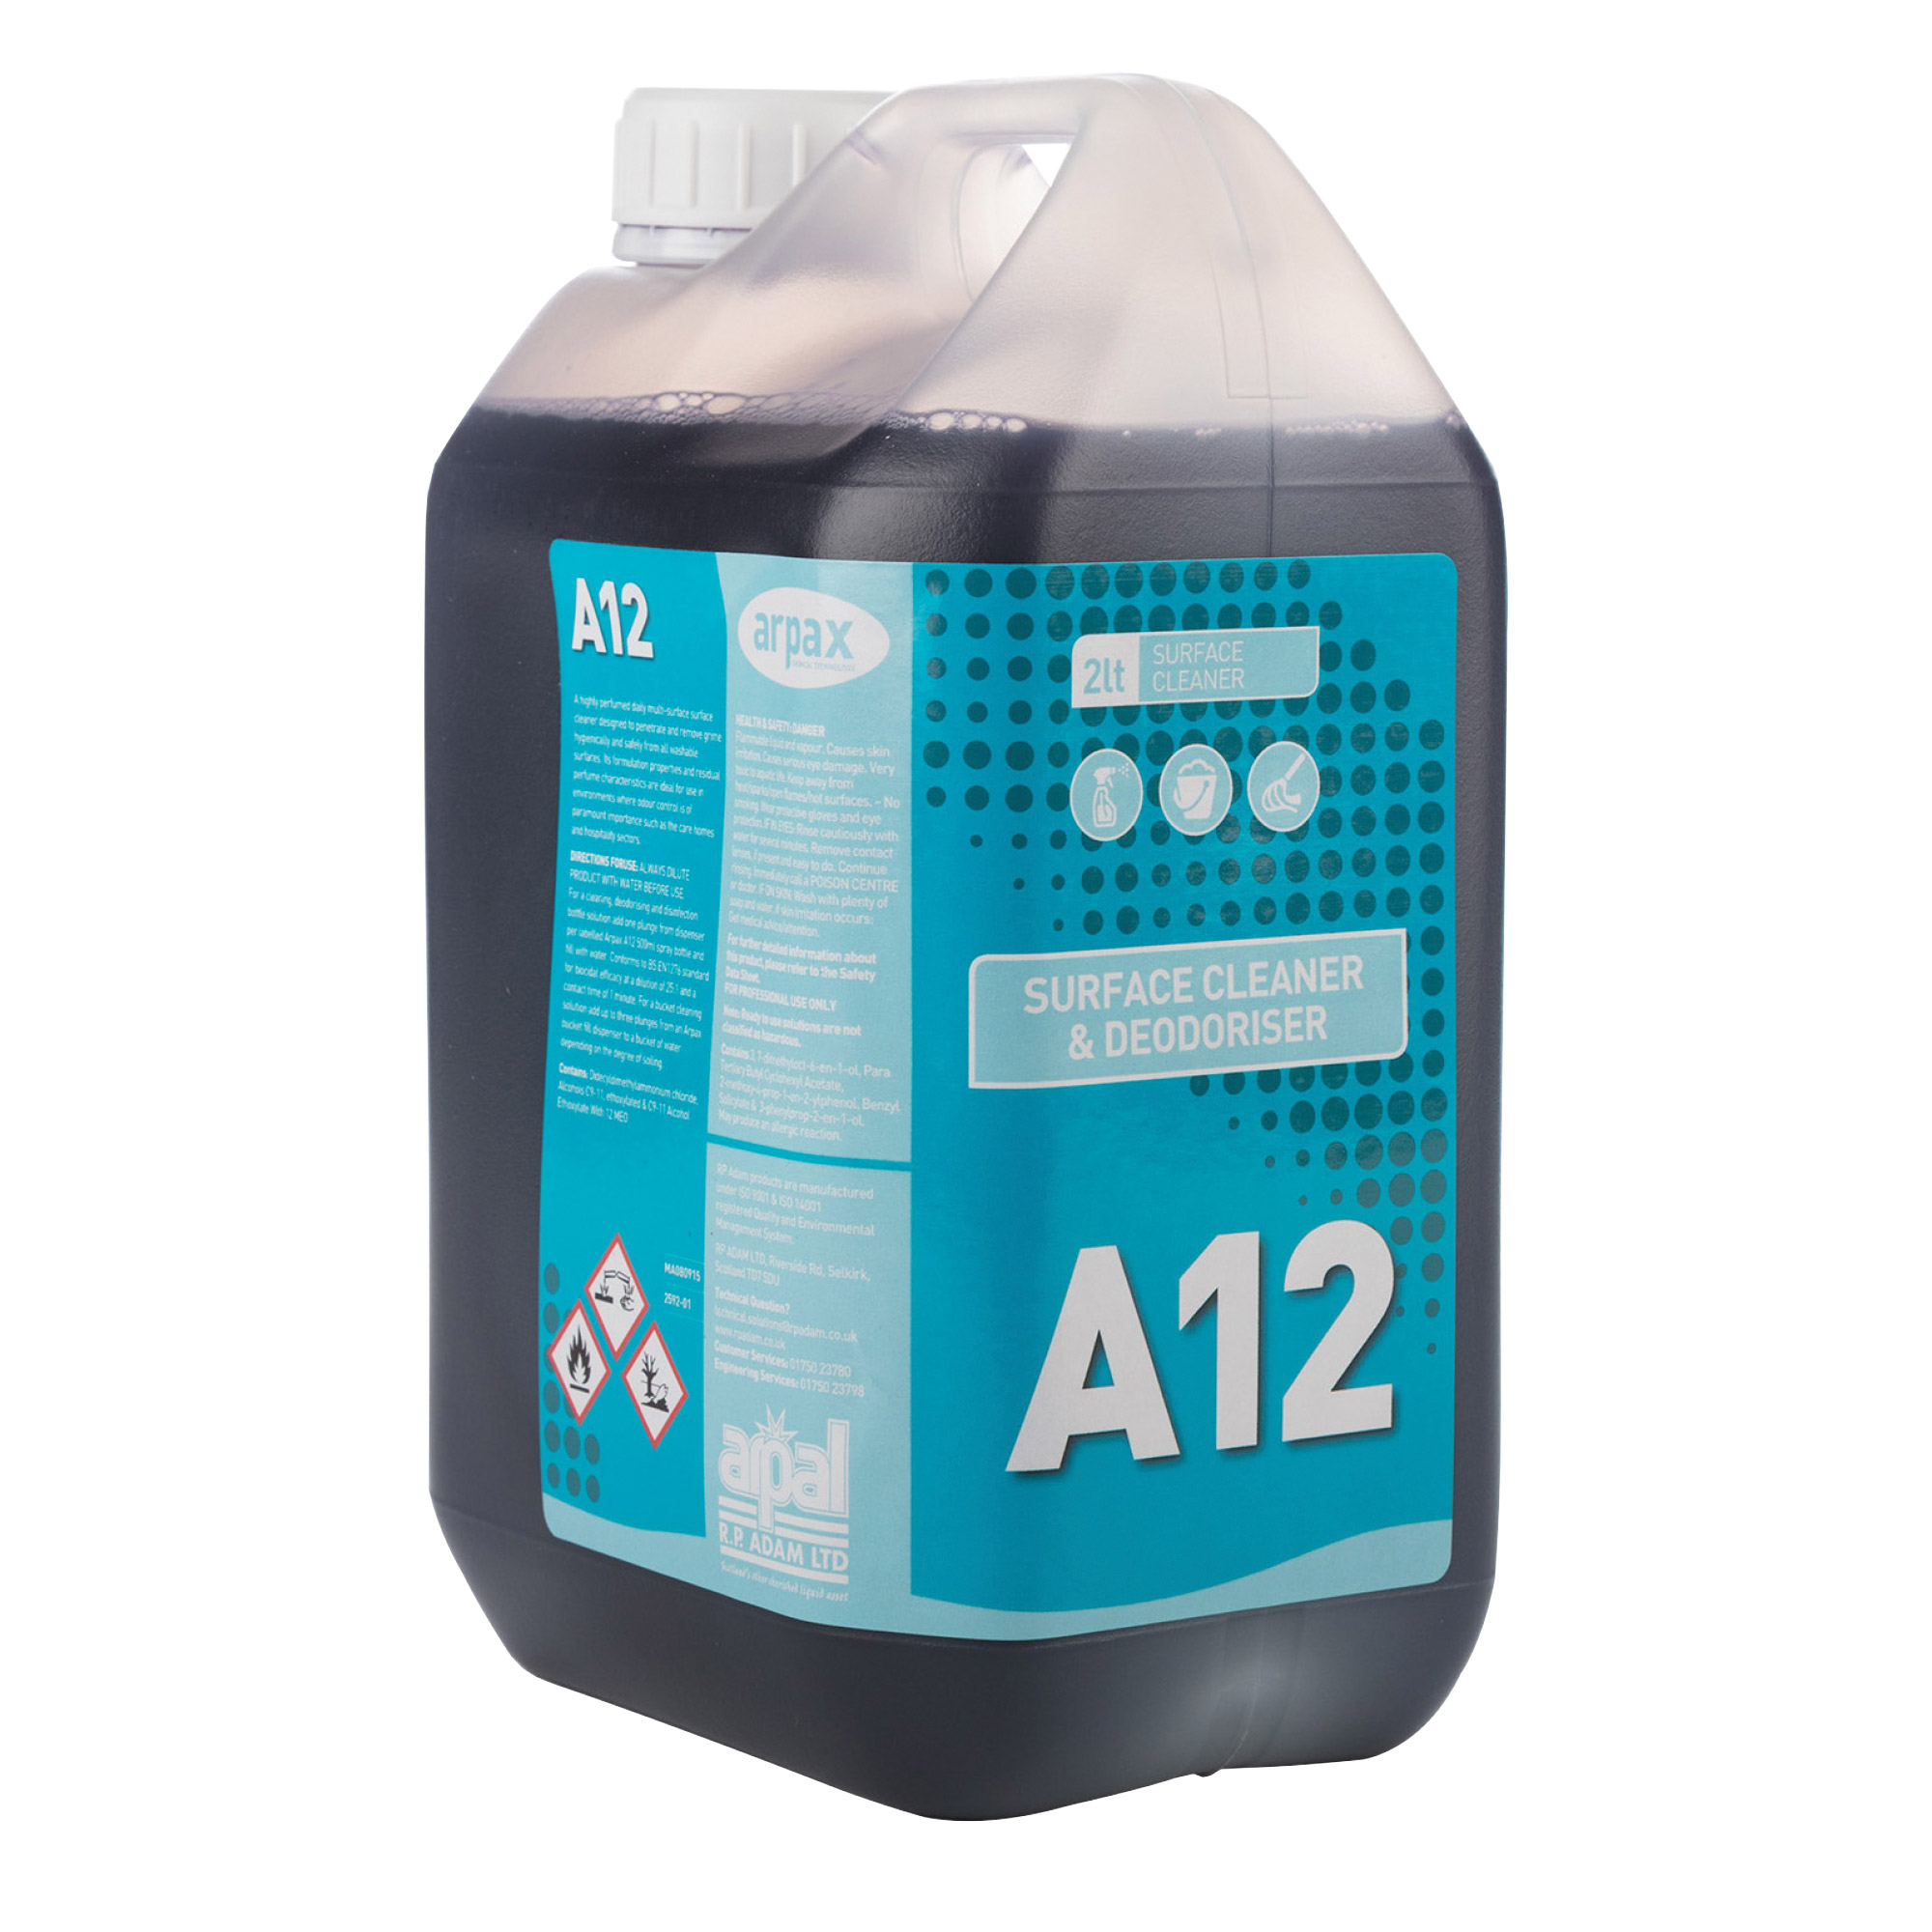 A12 Hard Surface Cleaner & Deordoriser 2L - Each